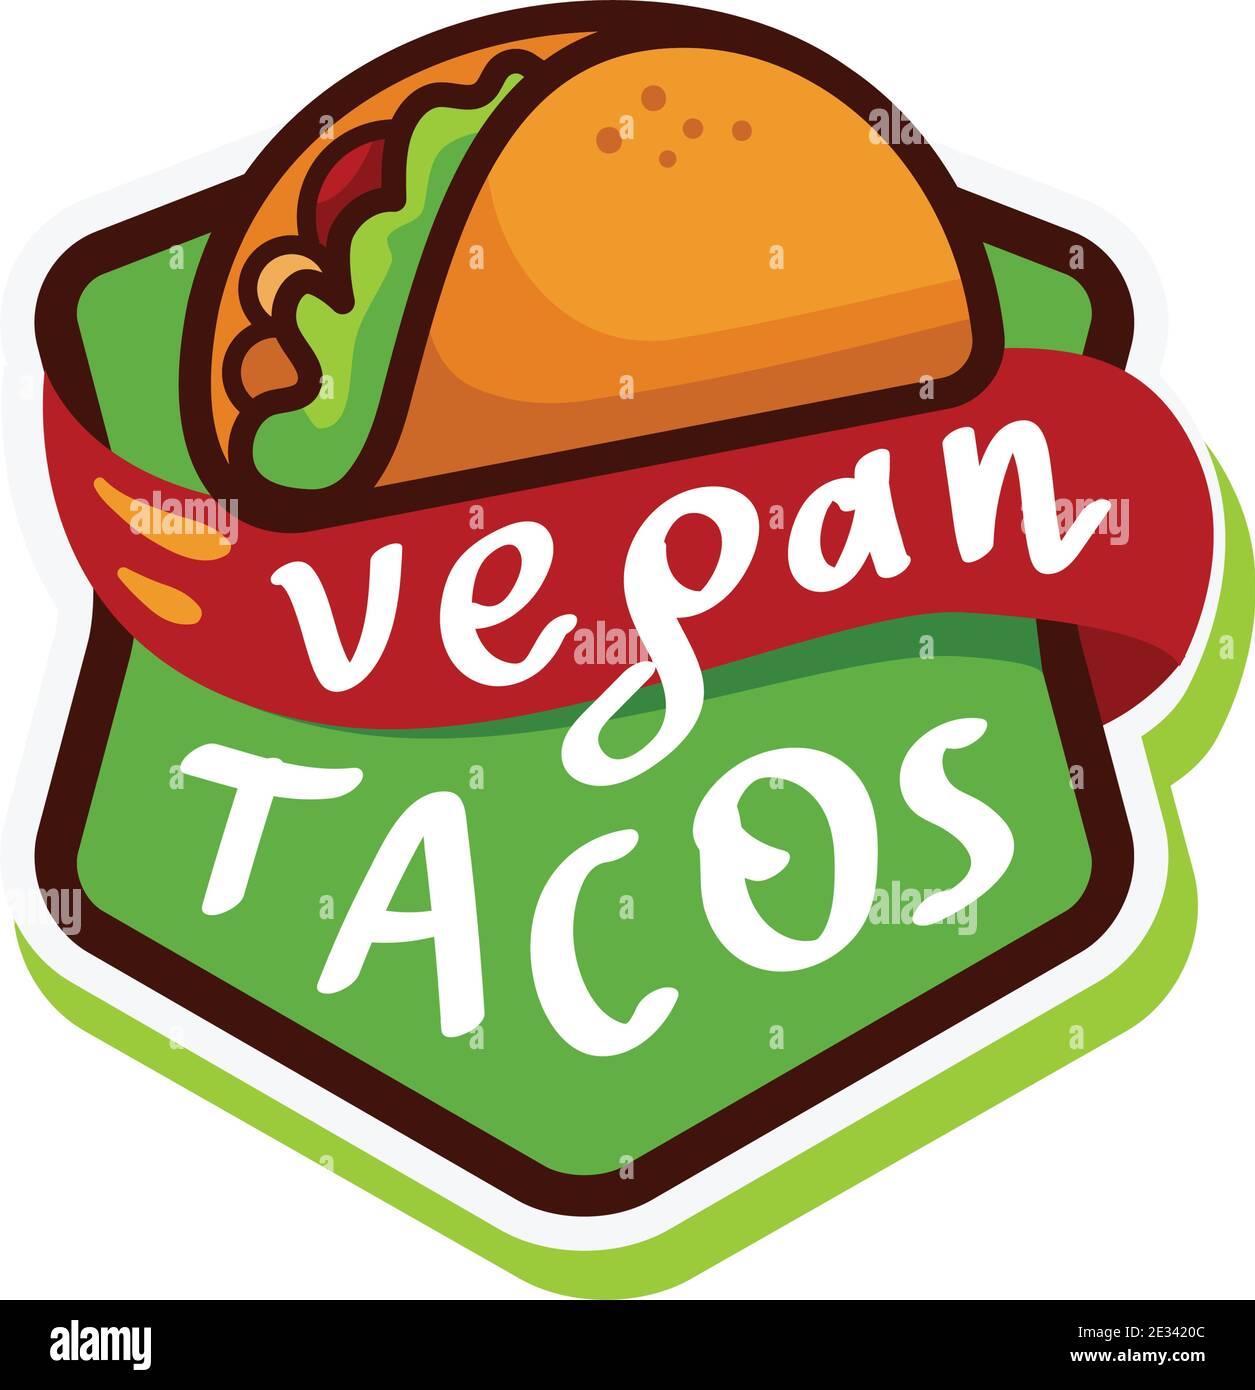 Vegan tacos Logo icon sticker menu. Vector illustration isolated on white background. Stock Vector